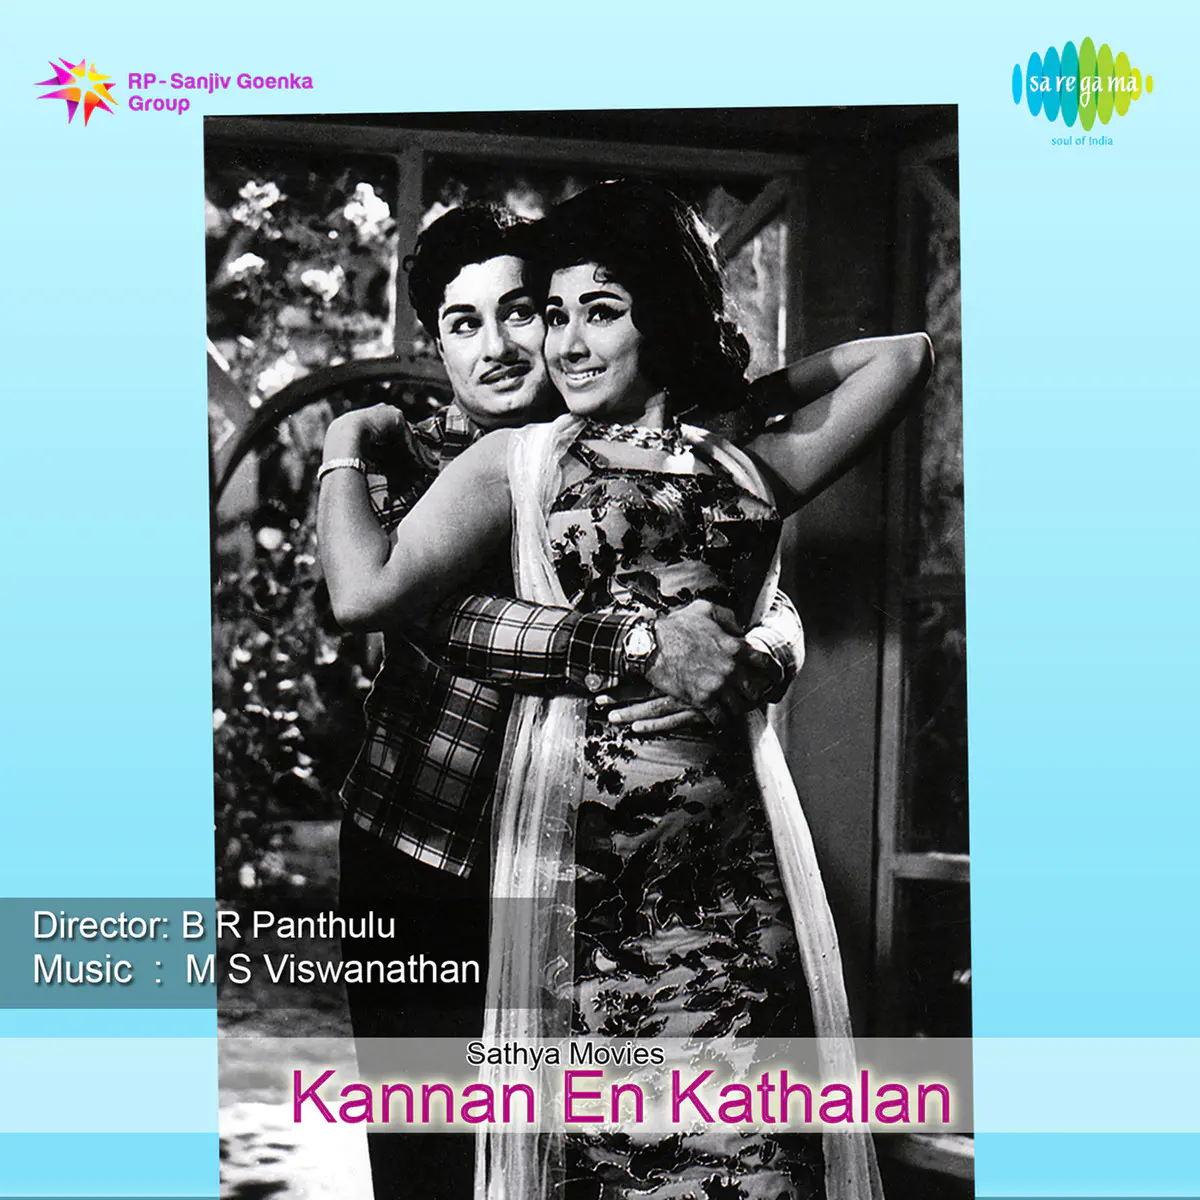 Kannan En Kathalan Songs Download Kannan En Kathalan Mp3 Tamil Songs Online Free On Gaana Com